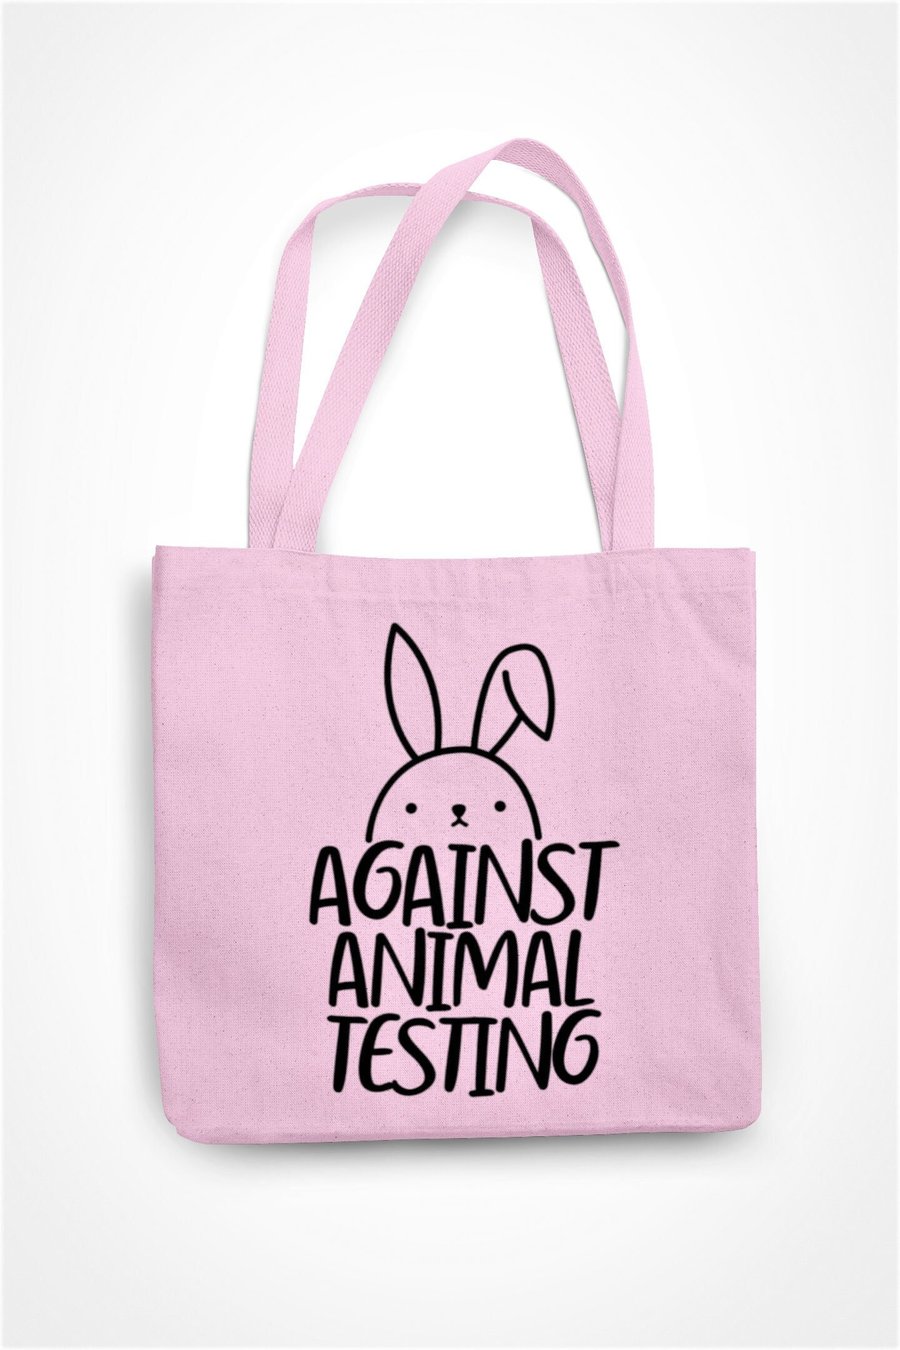 Against Animal Testing Tote Bag Cute Rabbit Eco Shopping Bag Gift Present